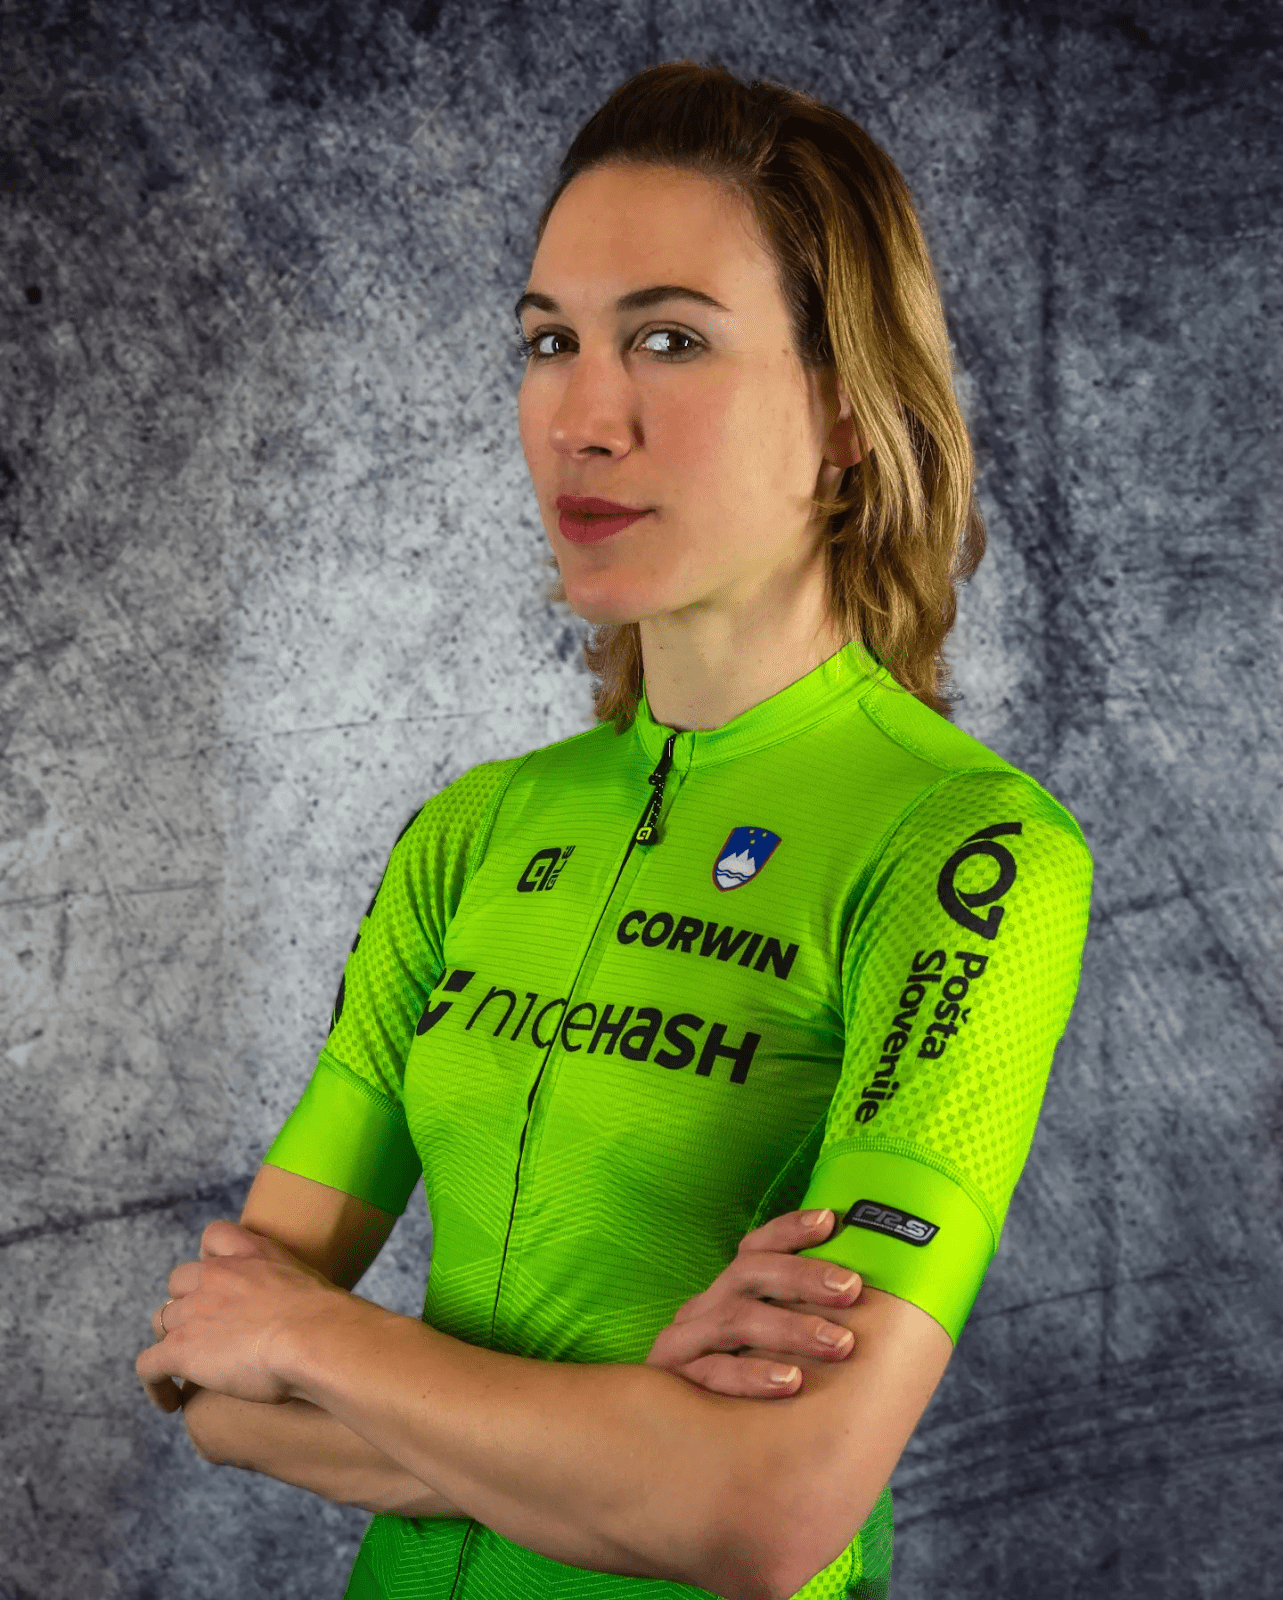 Elite Cyclist Laura Šimenc